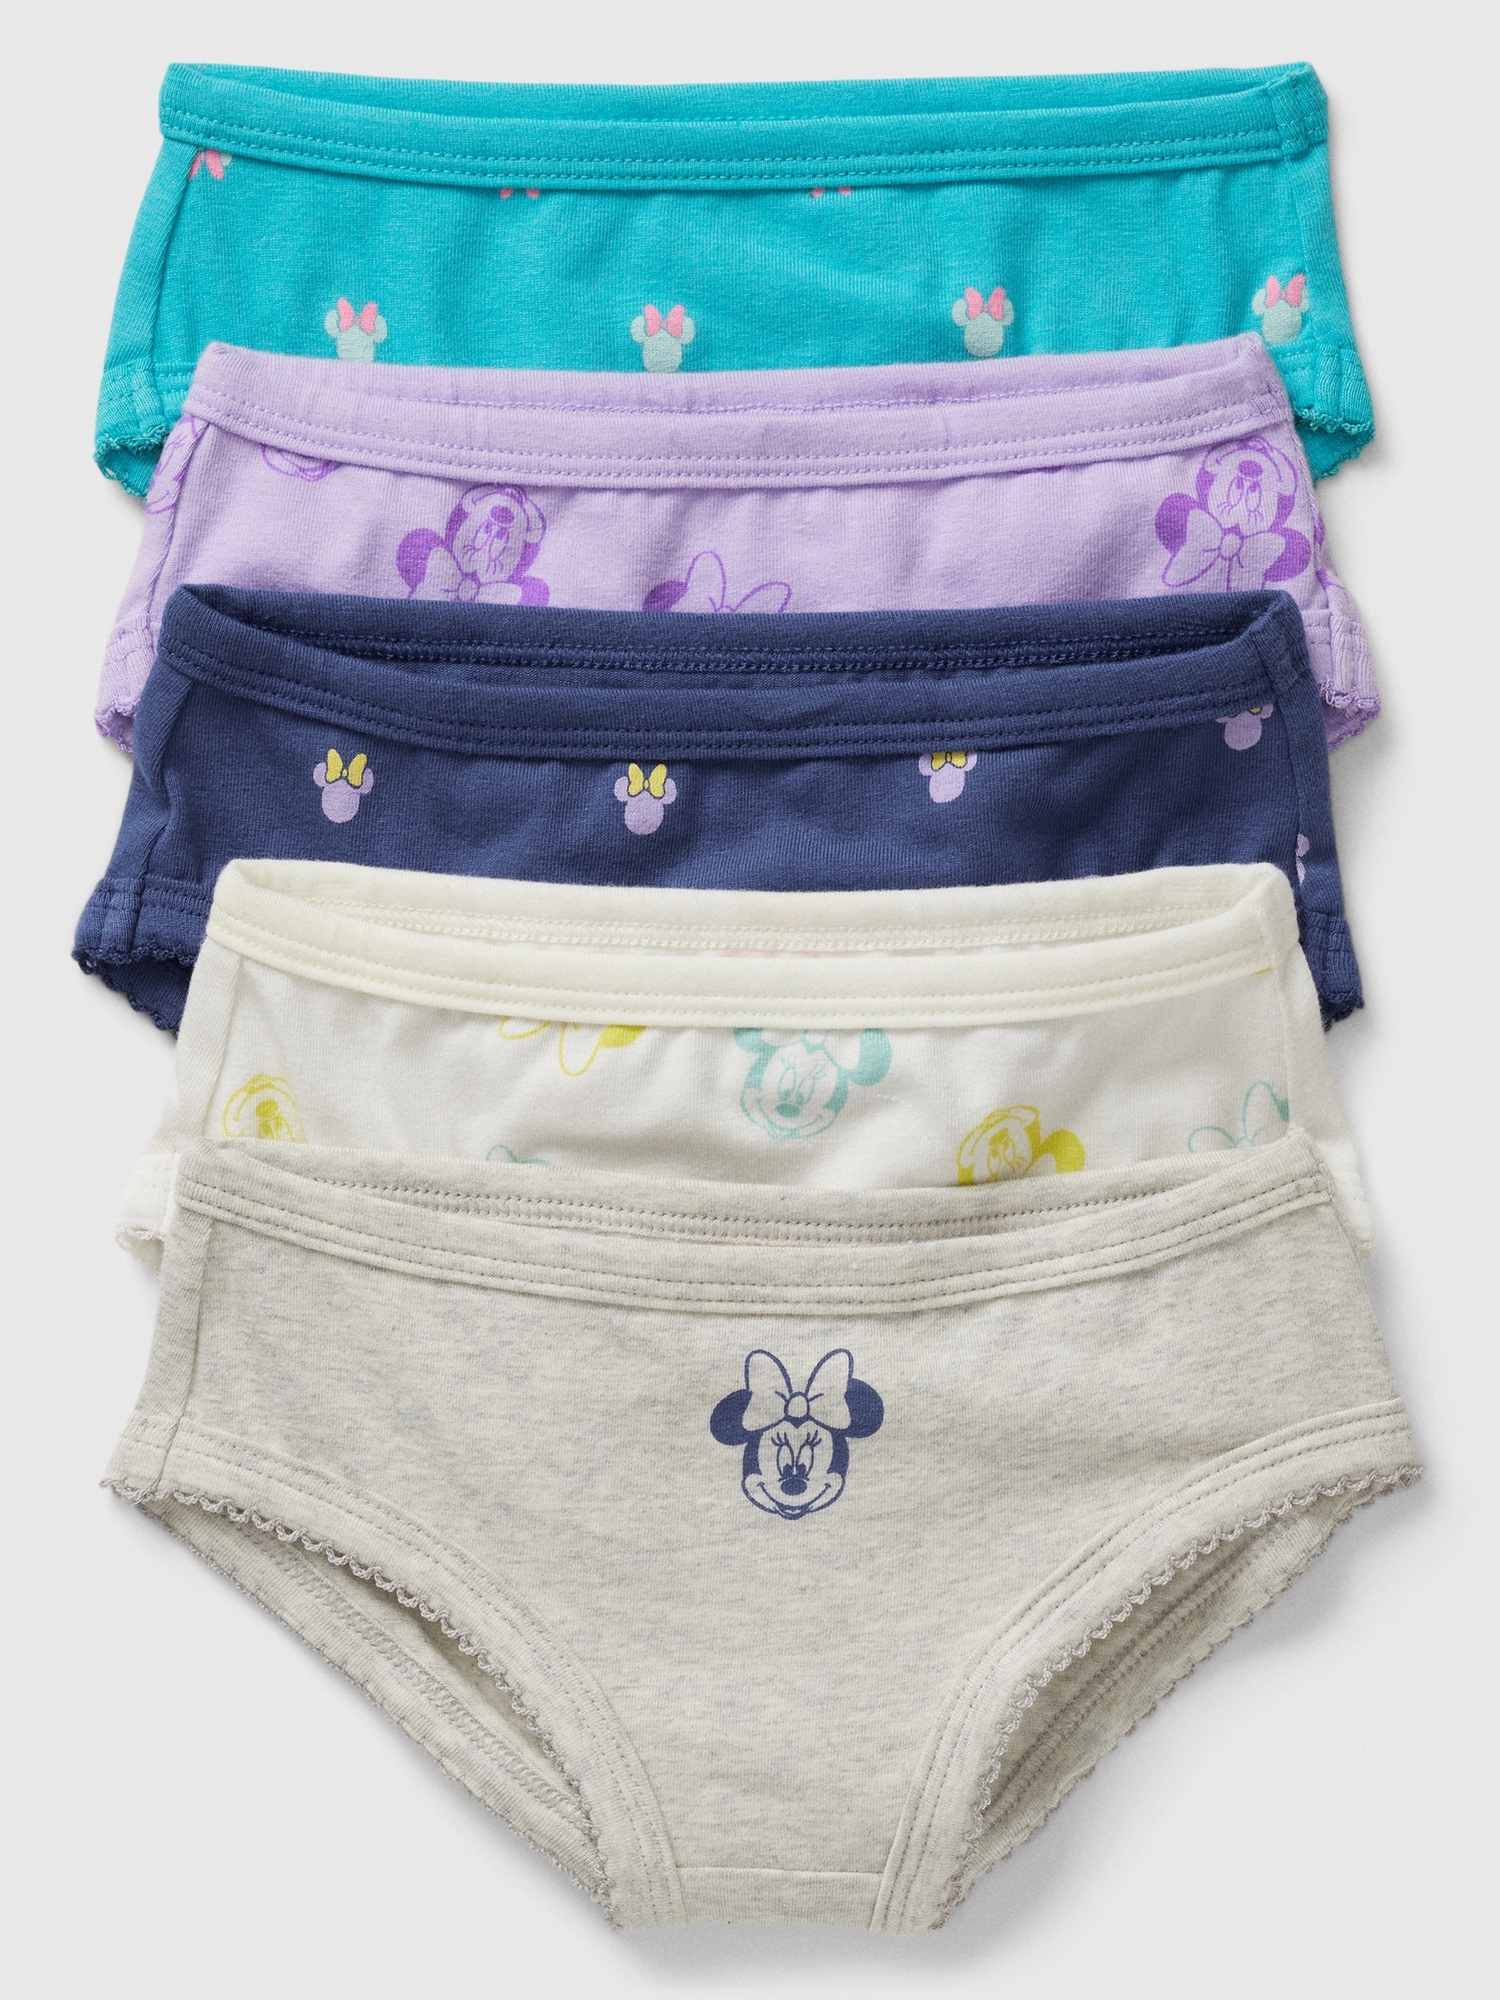 Disney Girls' Princess Underwear Pack of 5 Multi Size 6 